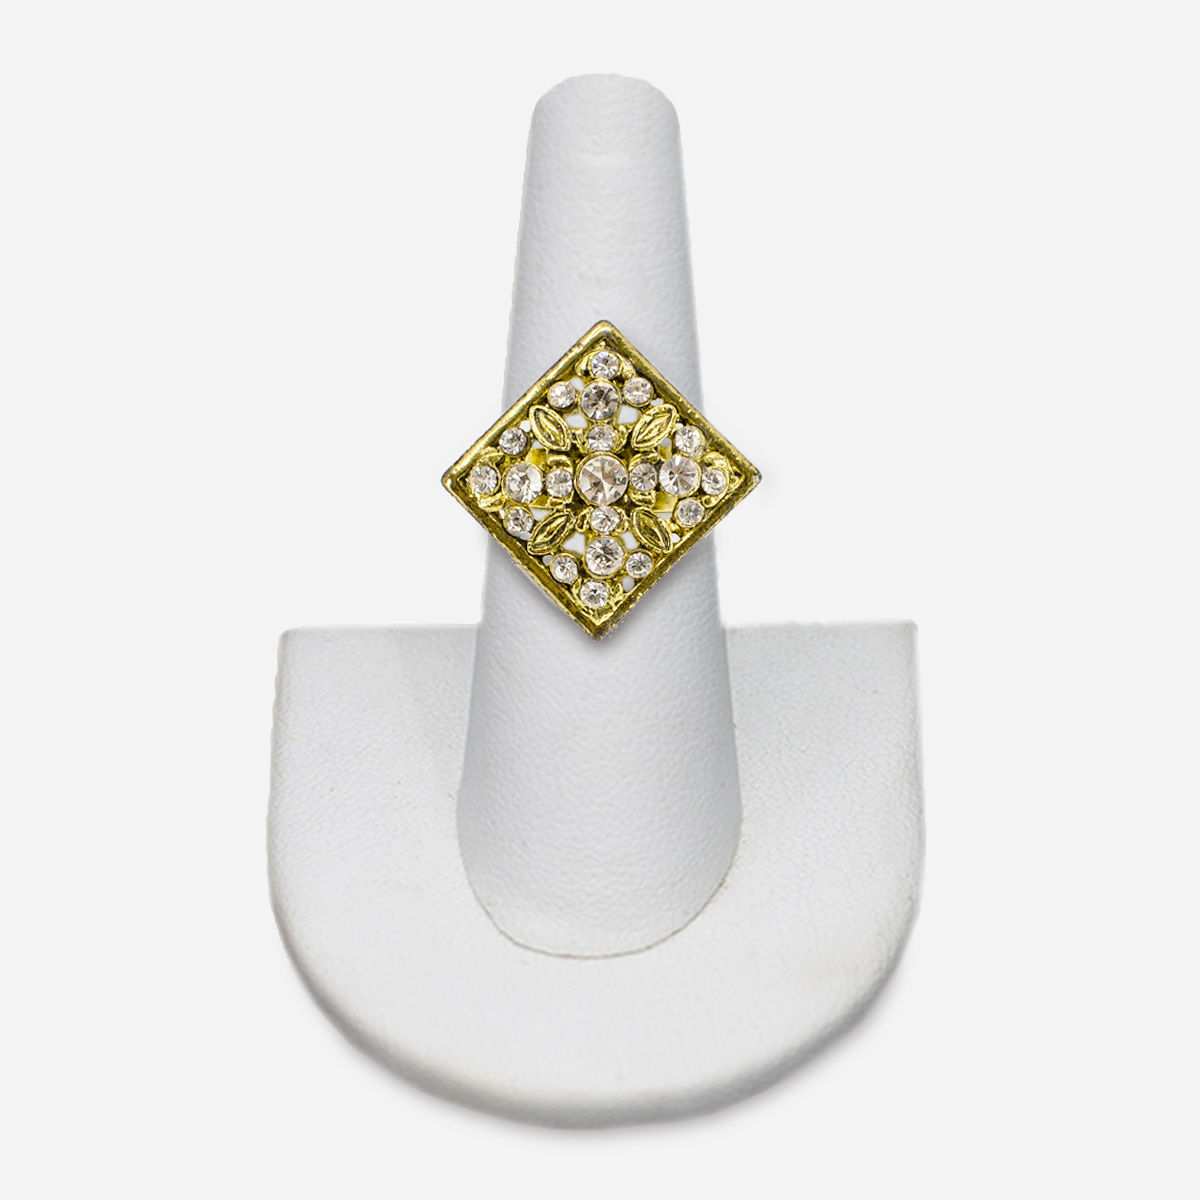 Diamond shaped ring